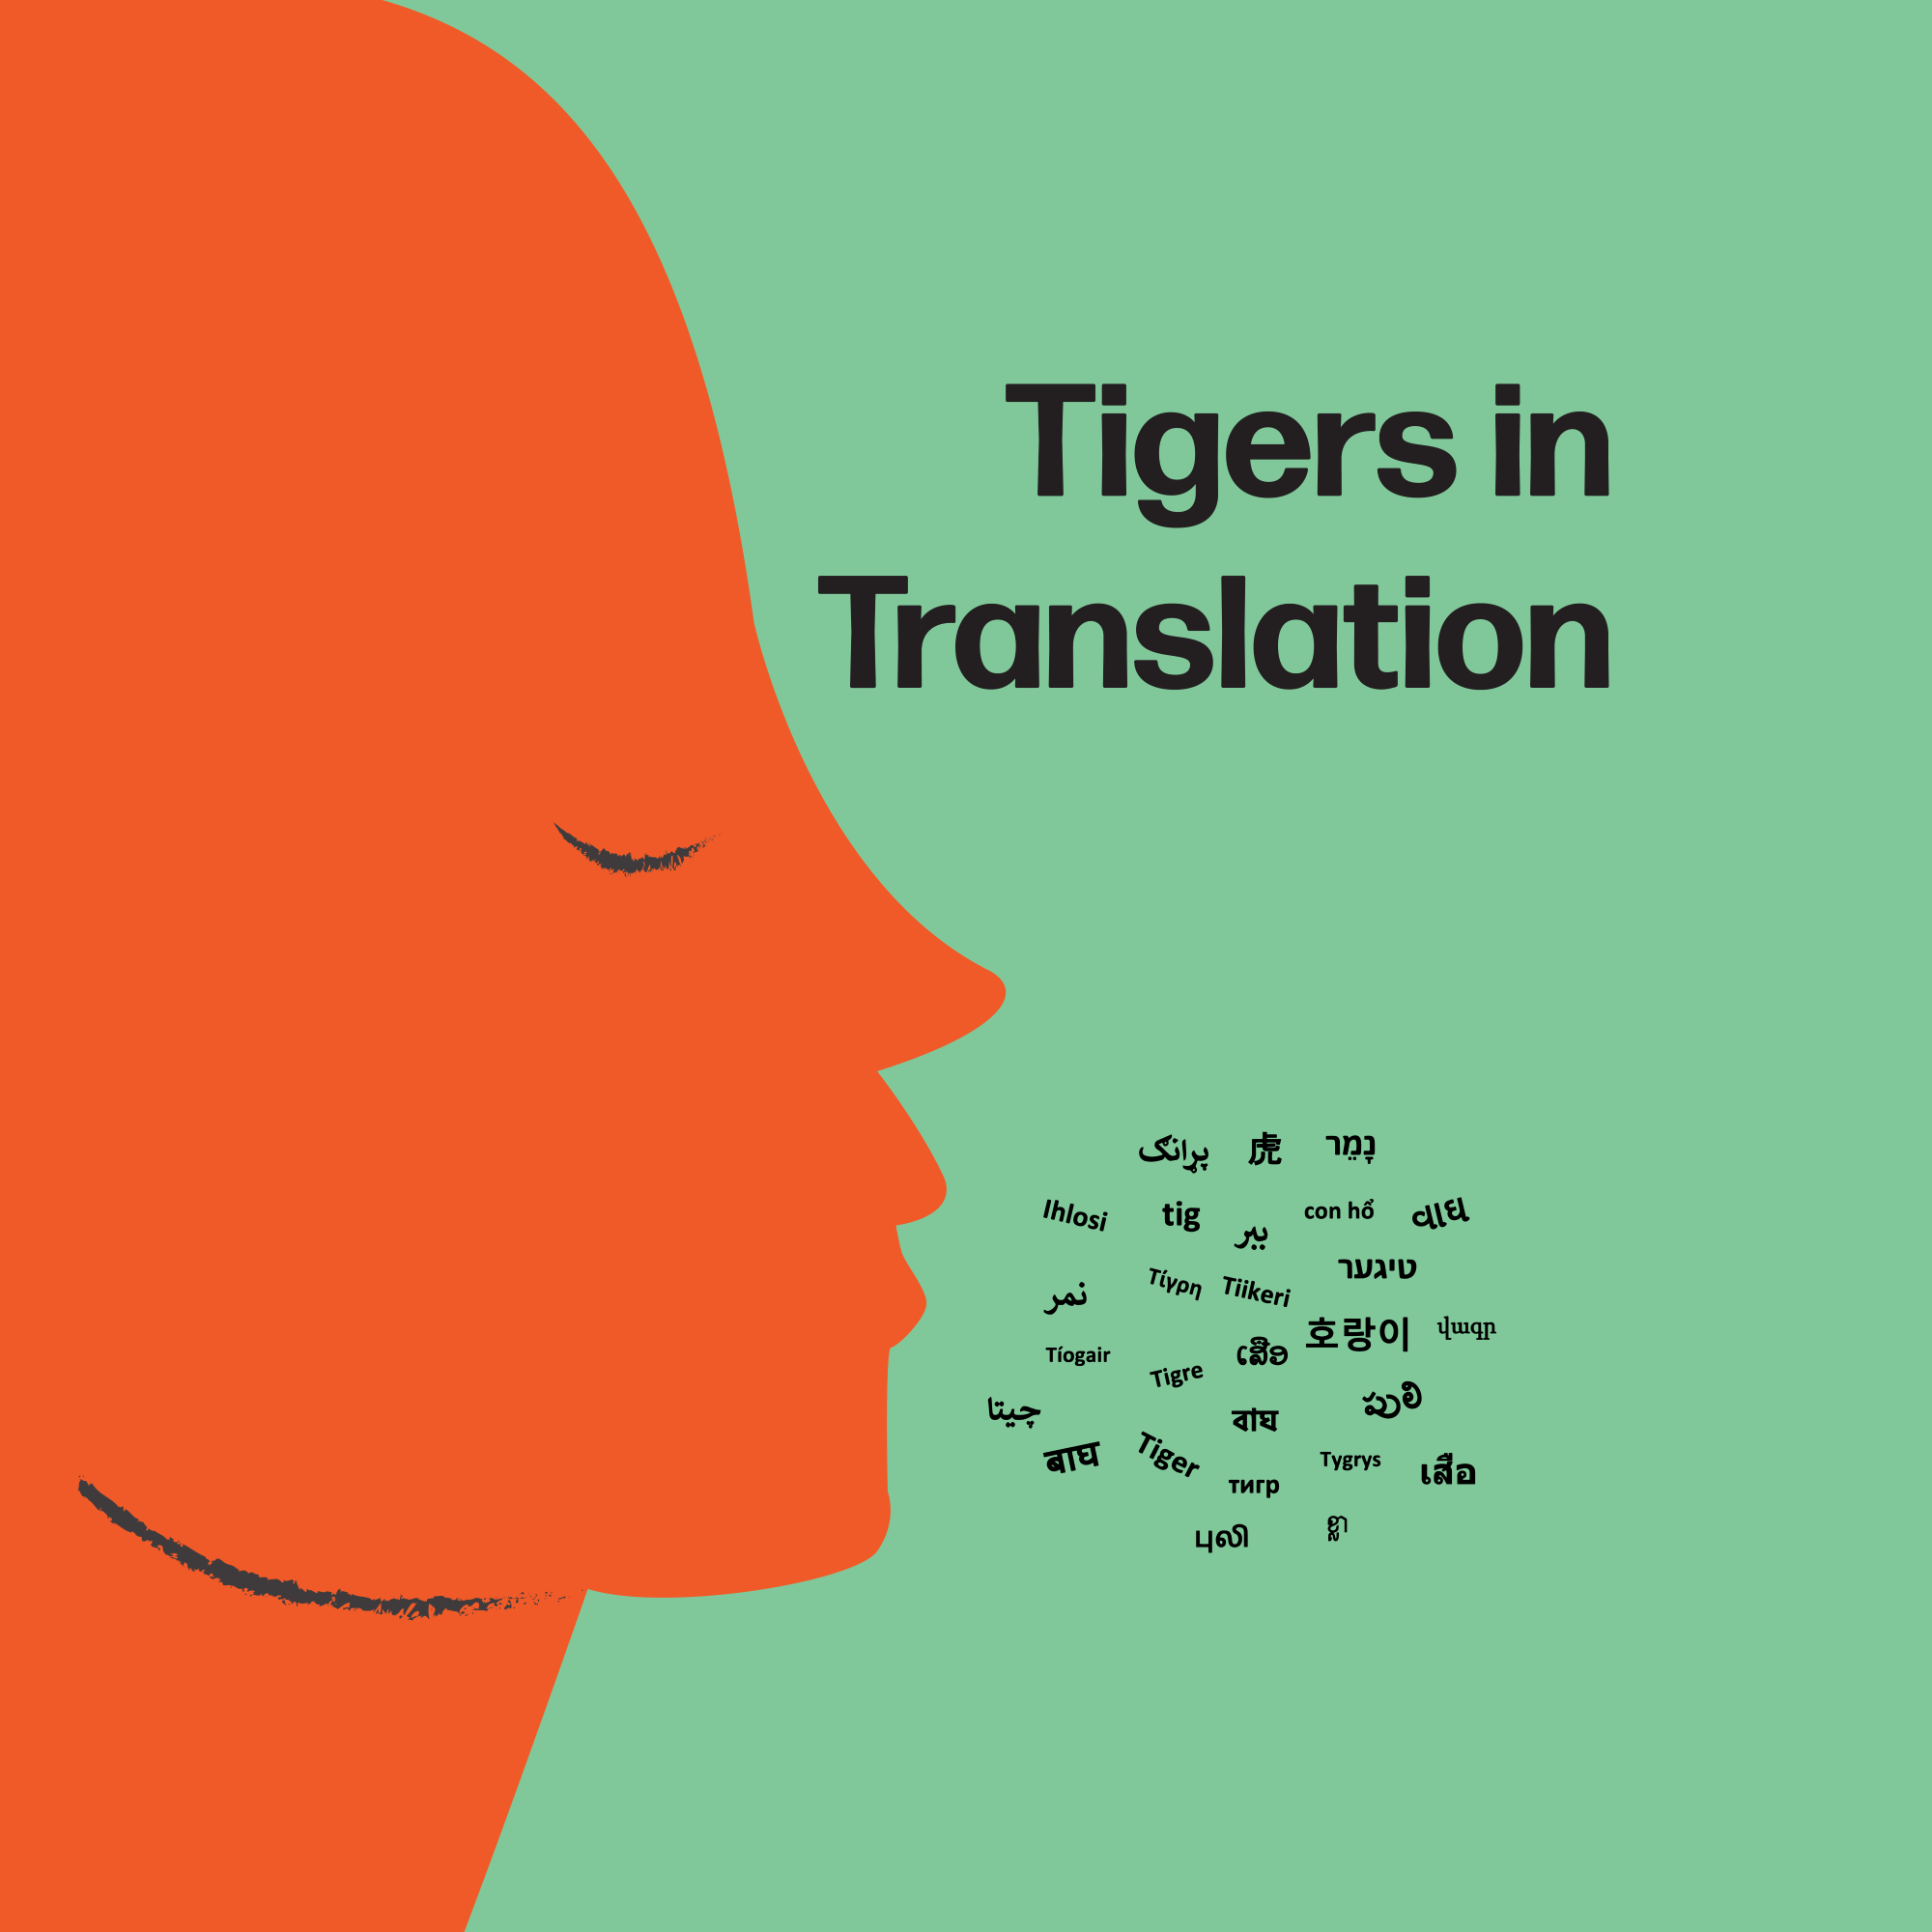 Tigers in Translation